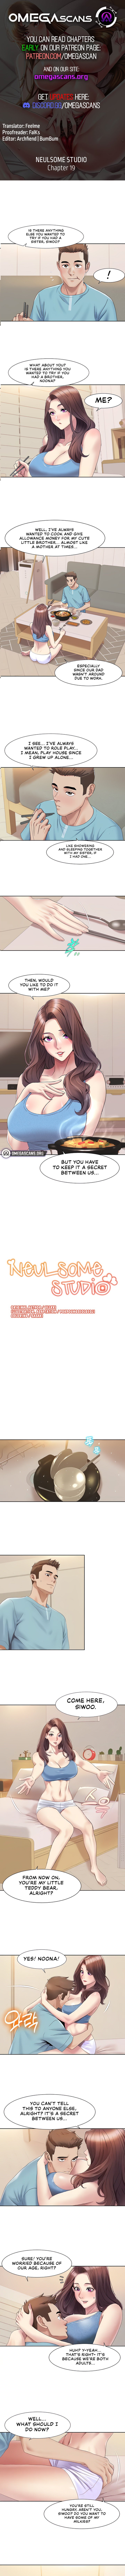 neulsome-studio-chap-19-0